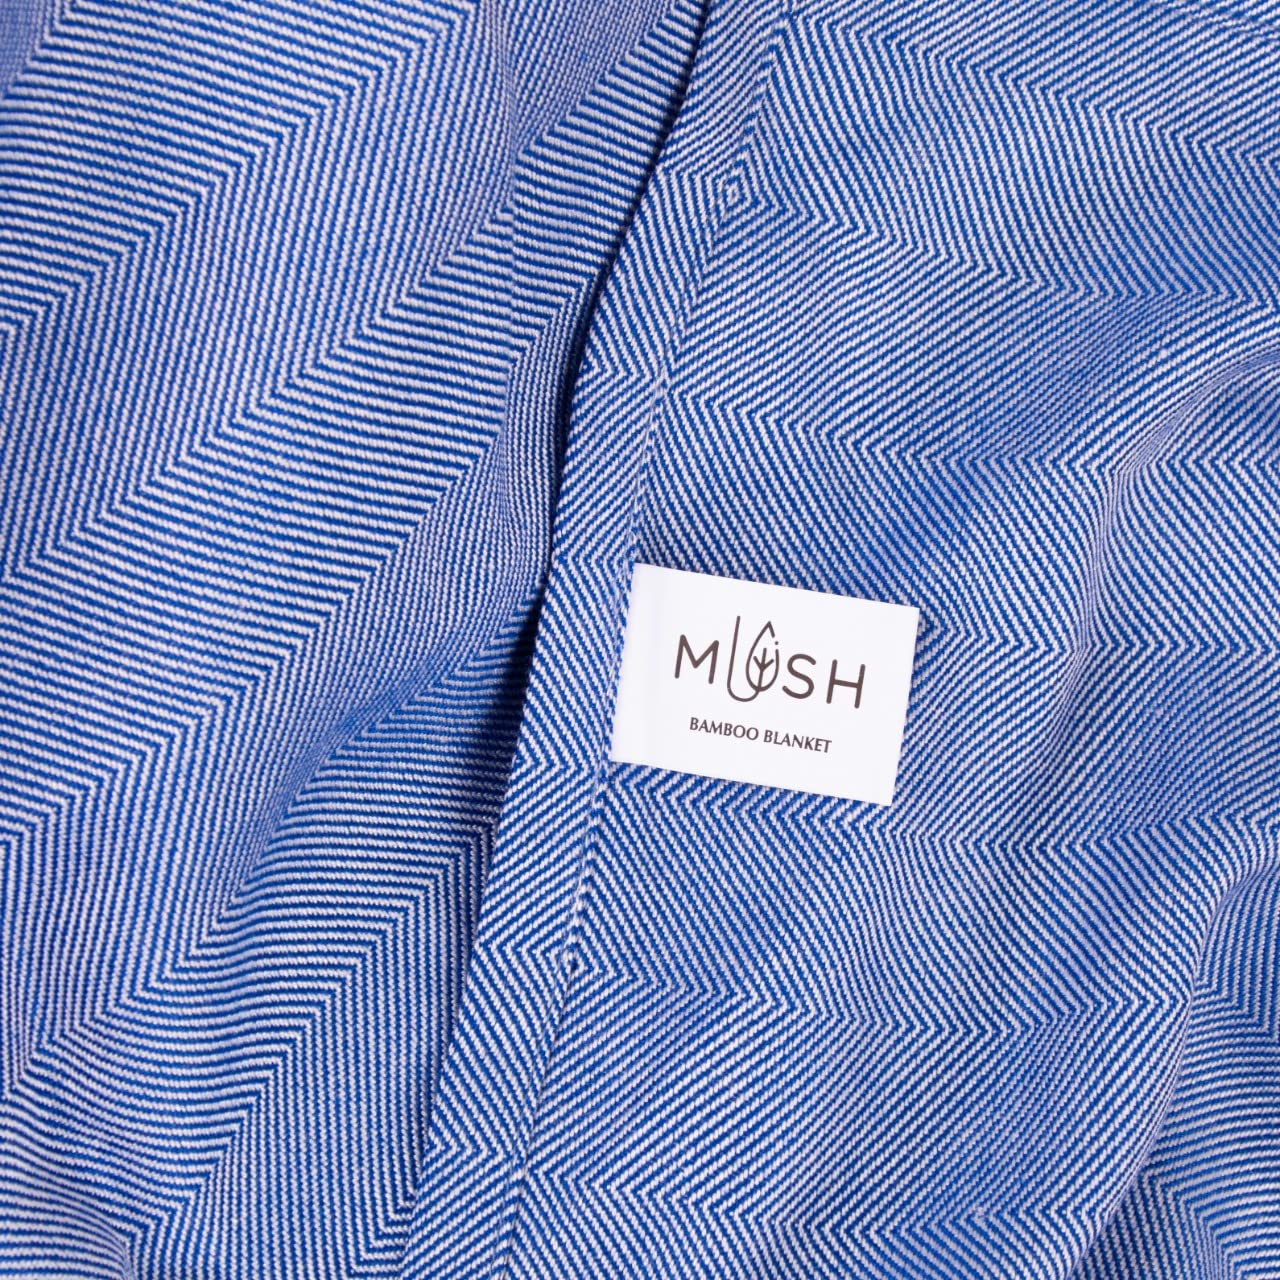 Mush Ultra-Soft, Light Weight & Thermoregulating, All Season 100% Bamboo Blanket (Navy Blue, Small - 3.33 x 4.5 ft)